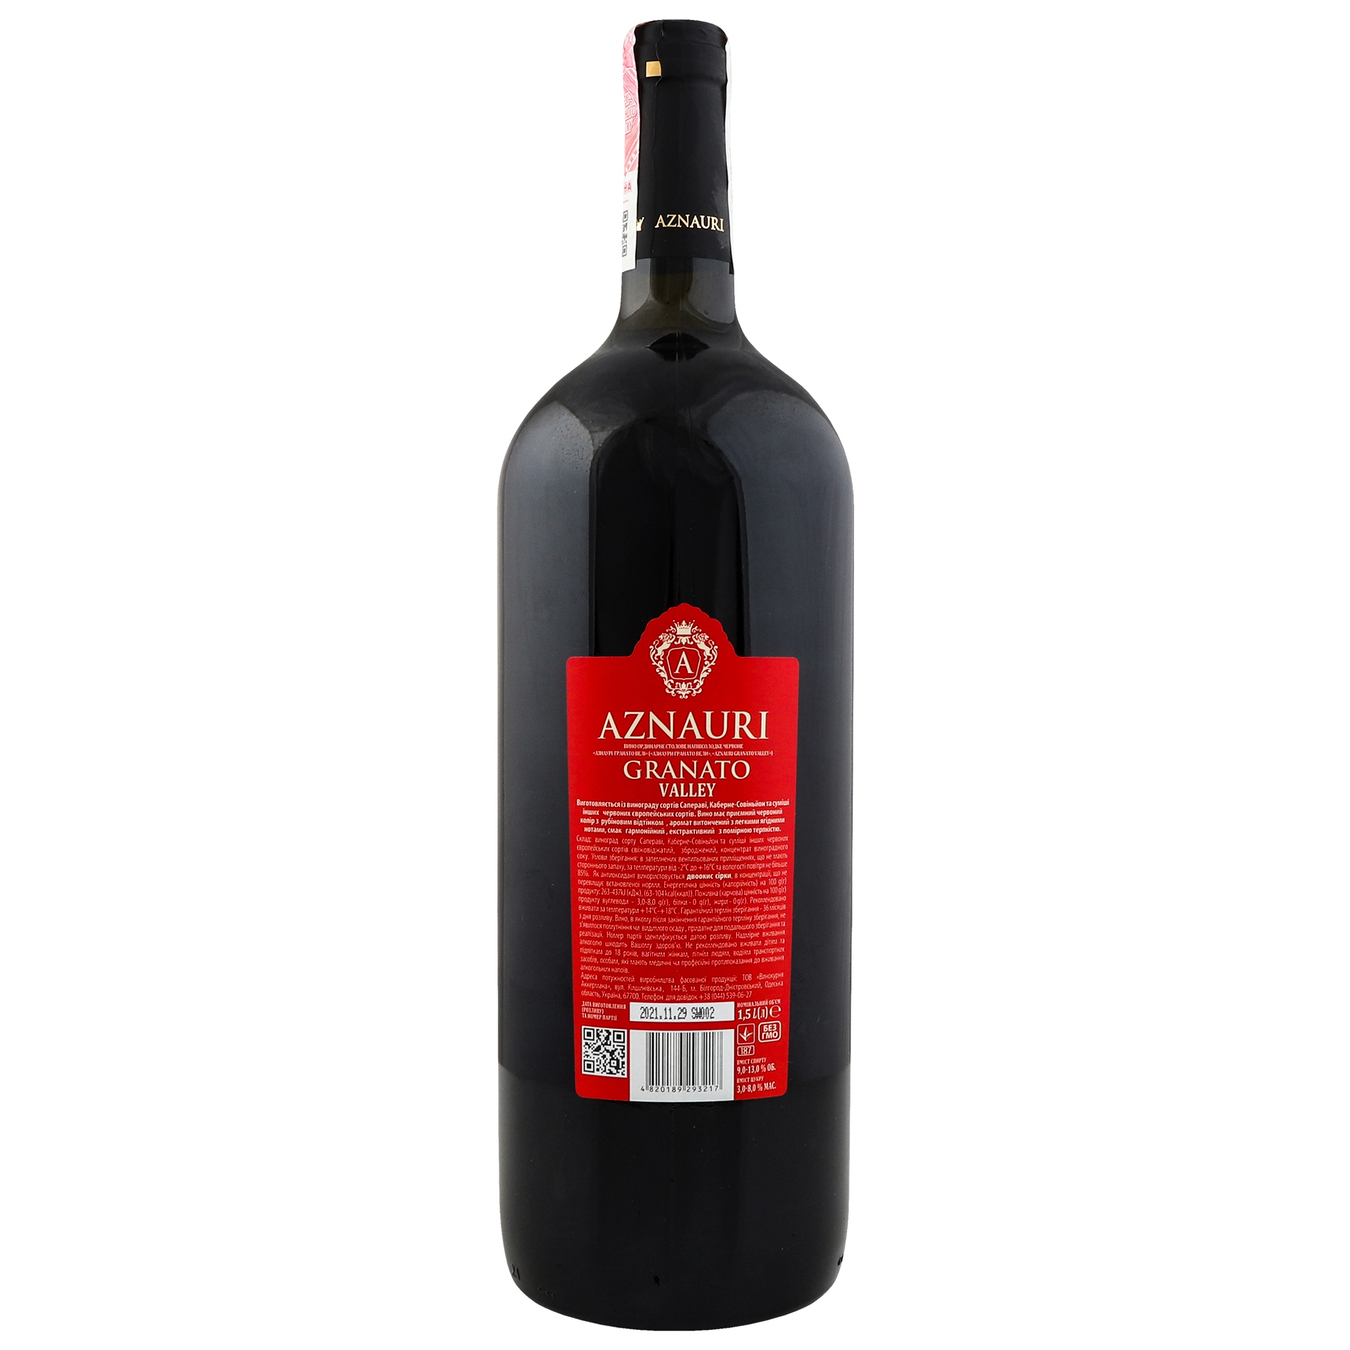 Aznauri Granato Valley red semi-sweet wine 13% 1.5 l 2